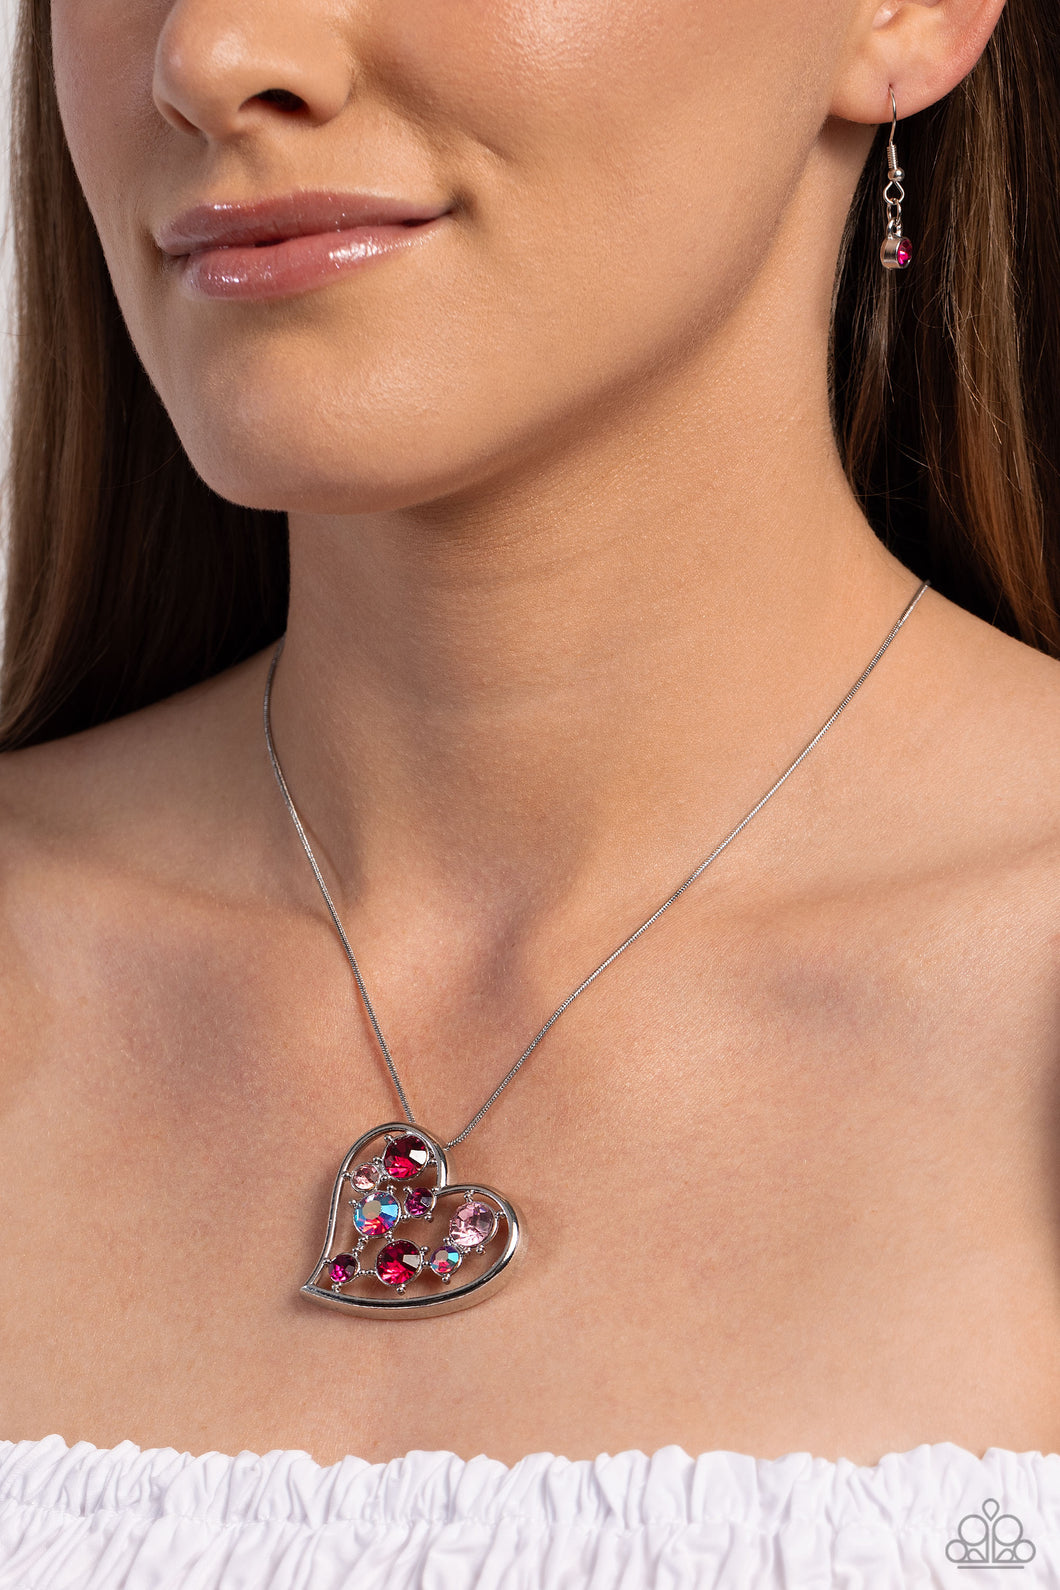 Paparazzi “Romantic Recognition” Pink Necklace Earring Set